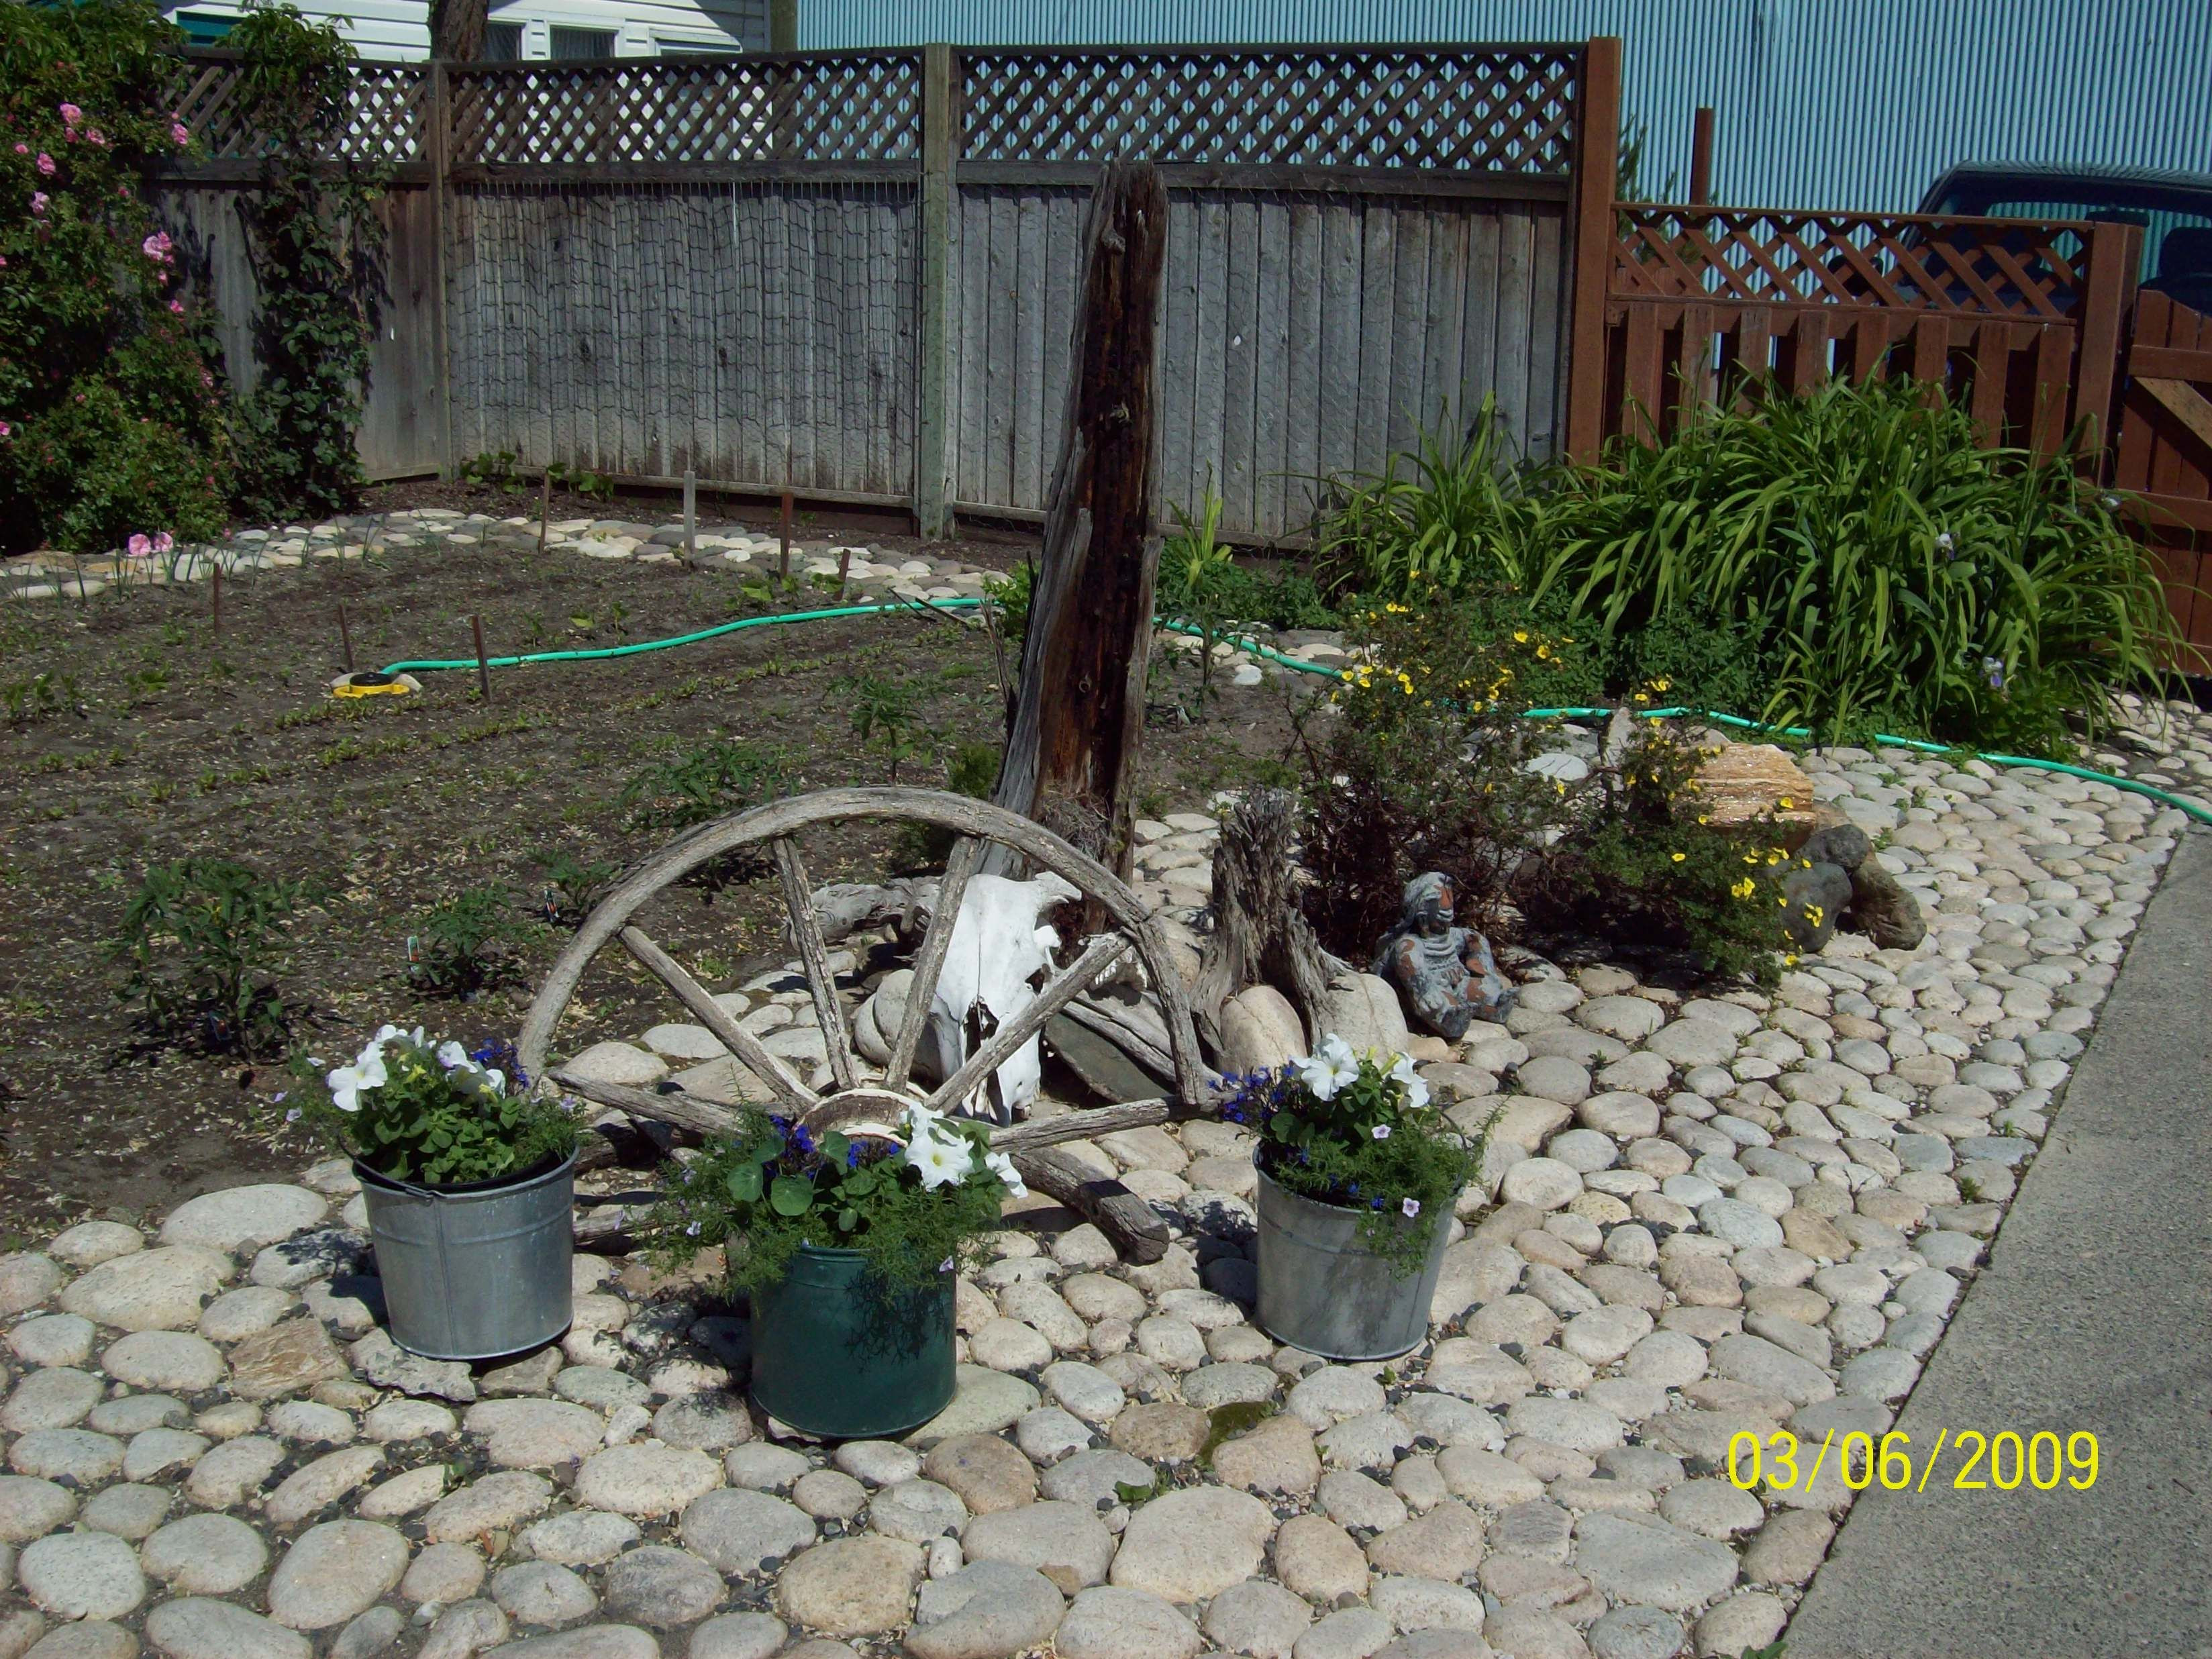 Best ideas about Garden Ideas Pinterest
. Save or Pin Broken Spokes Vintage Garden Ideas Now.